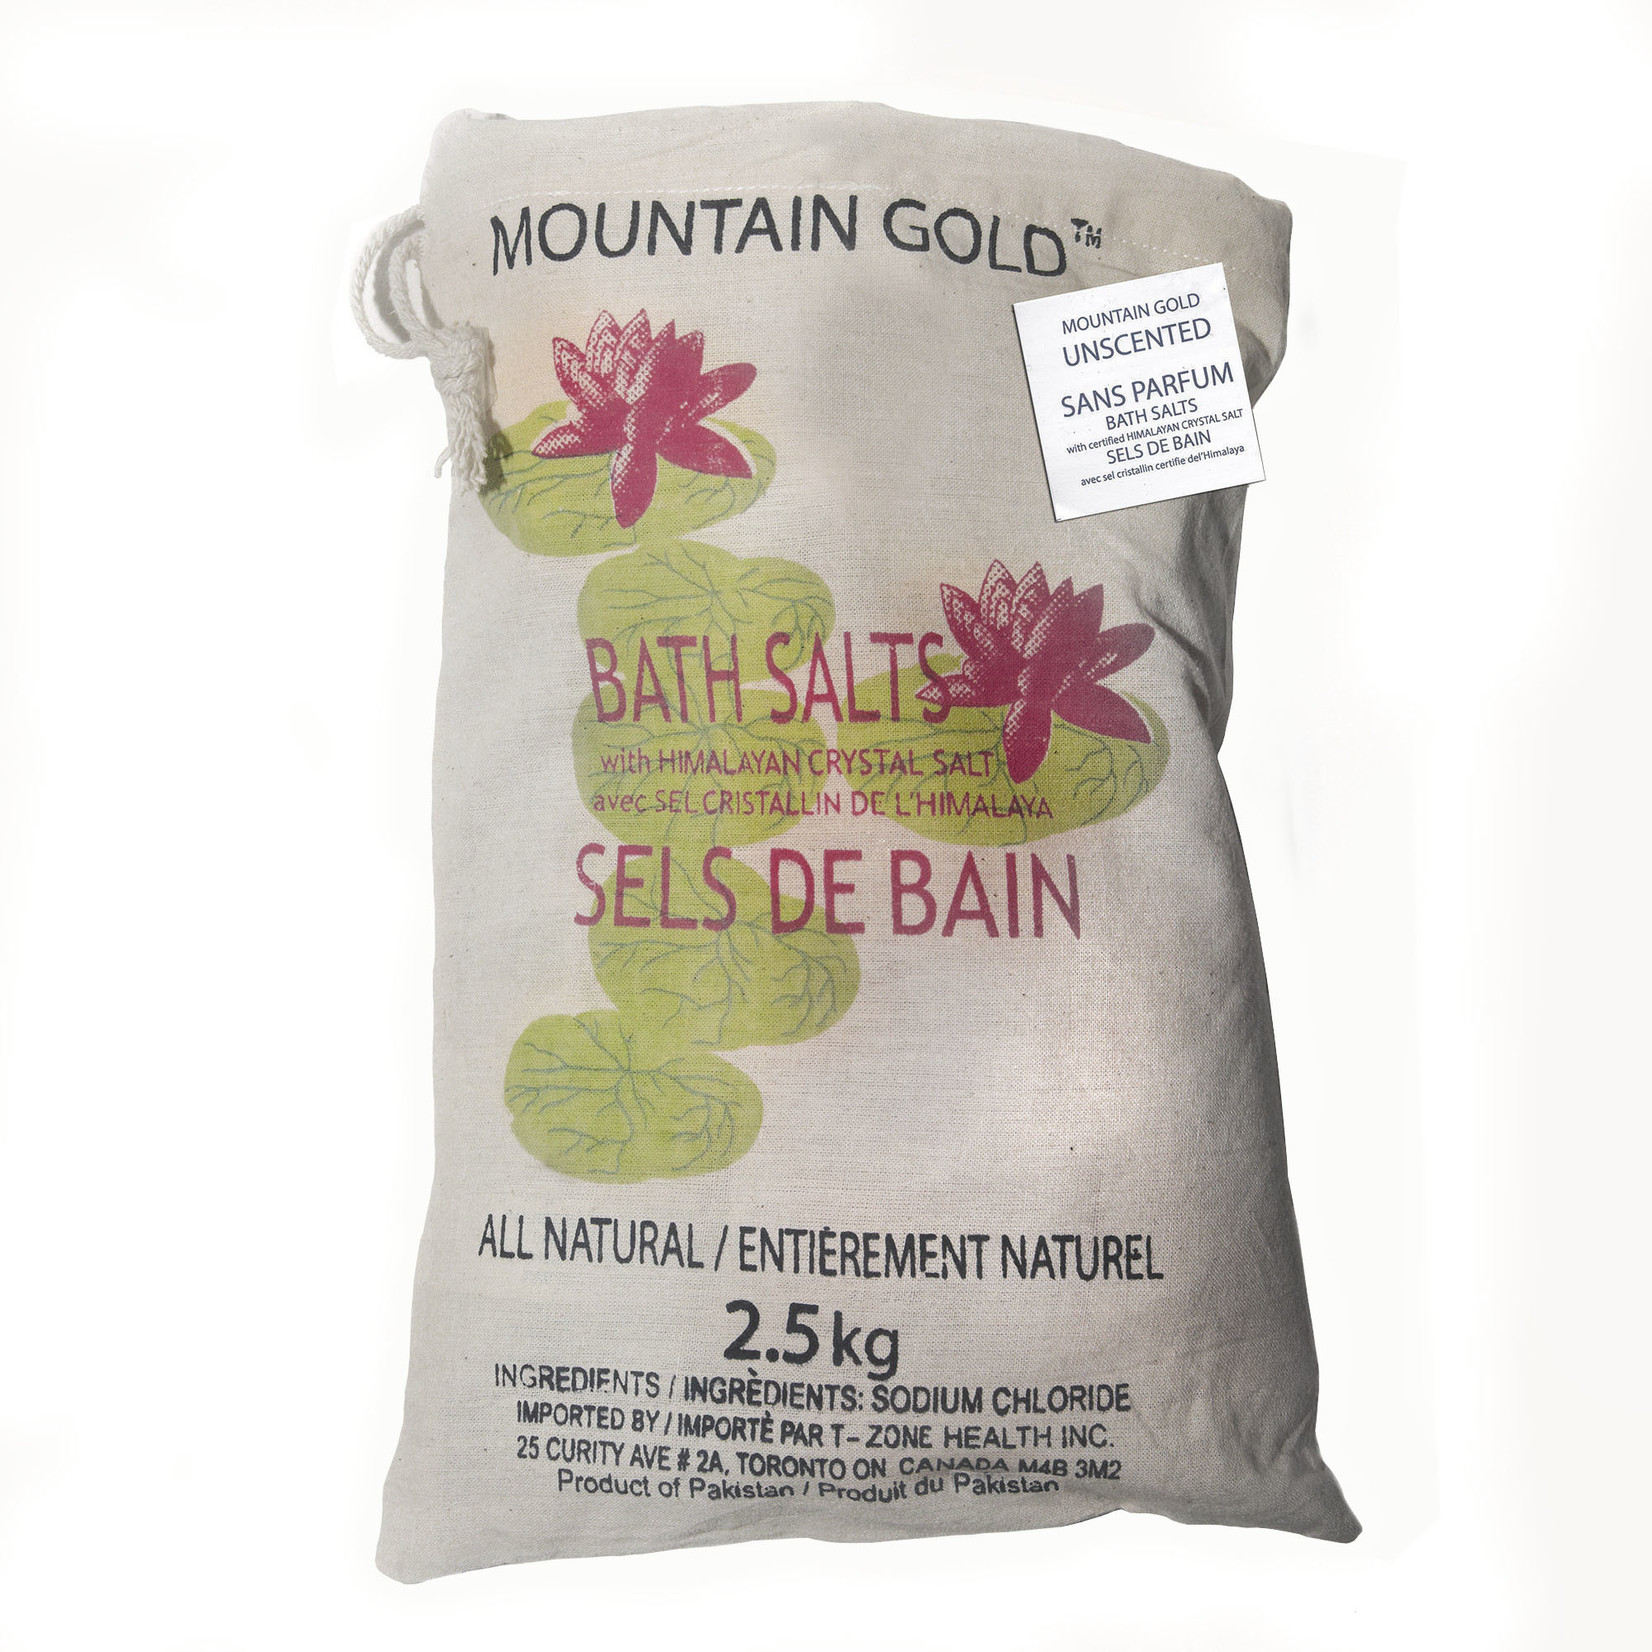 MOUNTAIN GOLD MOUNTAIN GOLD BATH SALTS UNSCENTED 2.5KG